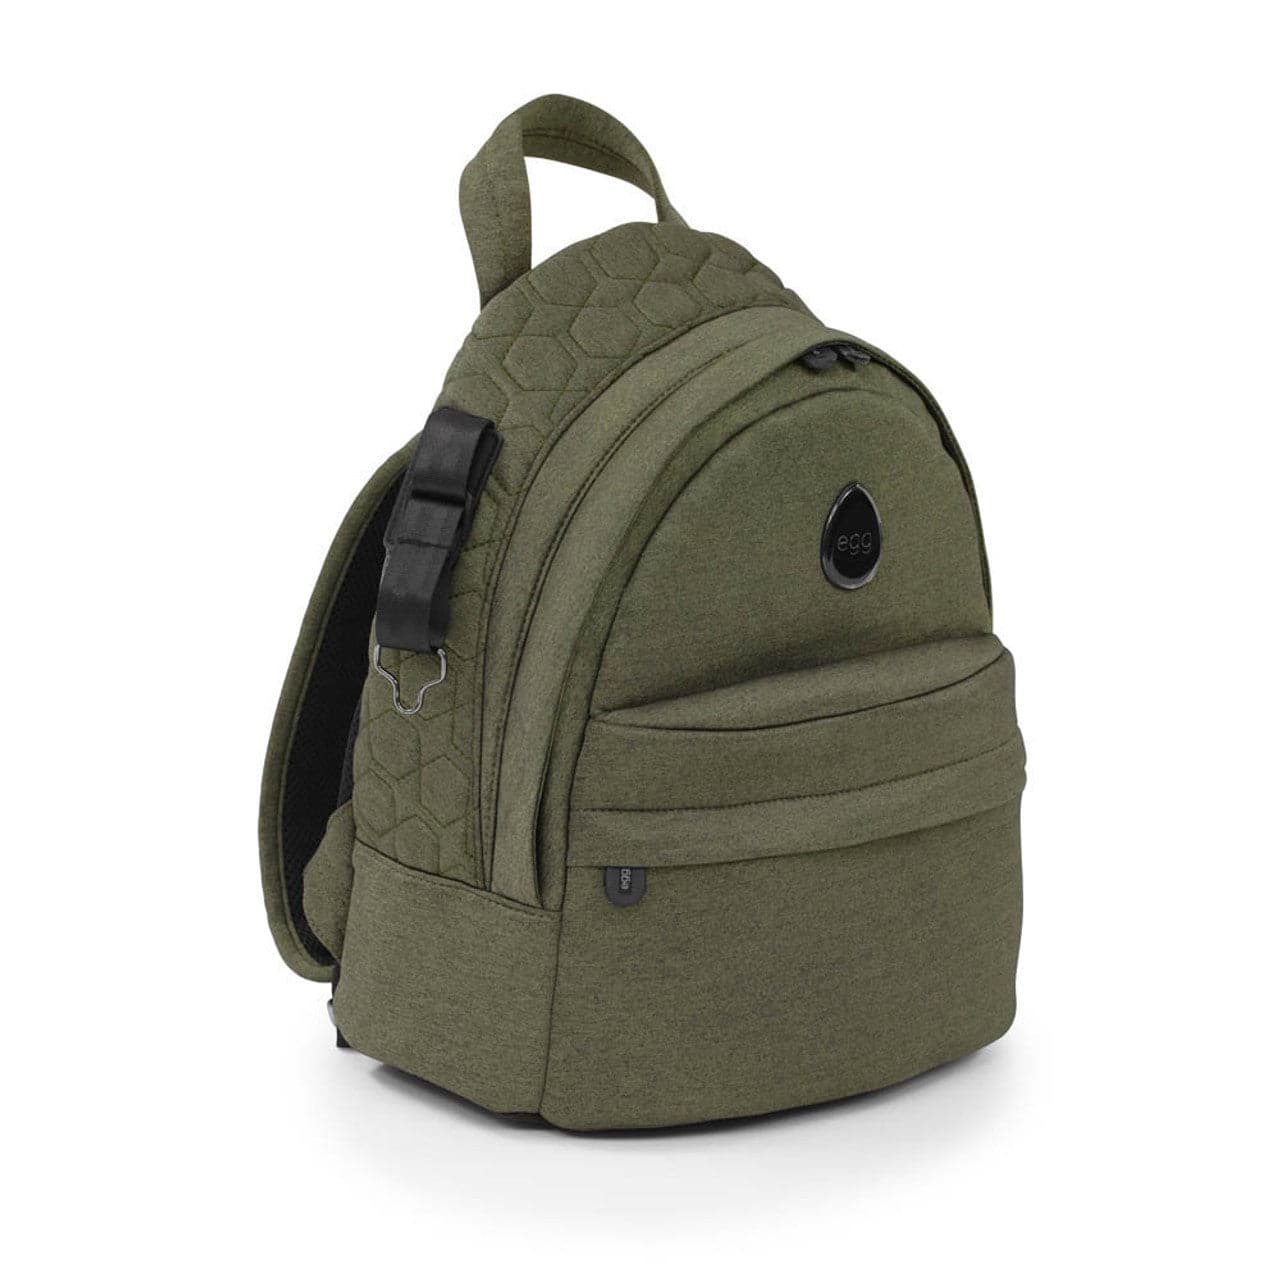 Egg® 2 Backpack - Hunter Green - For Your Little One